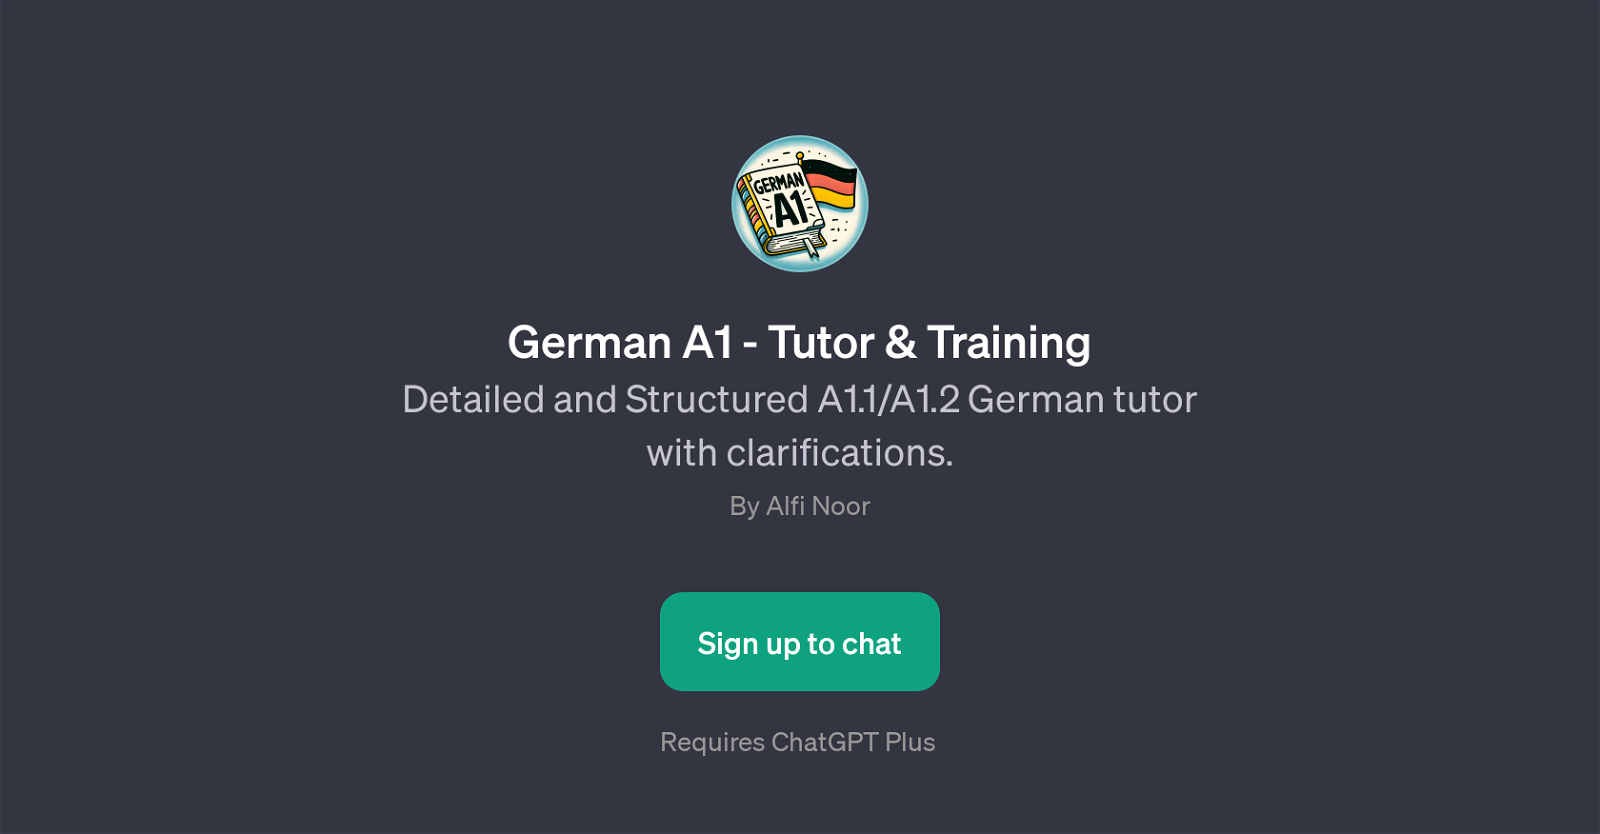 German A1 - Tutor & Training website